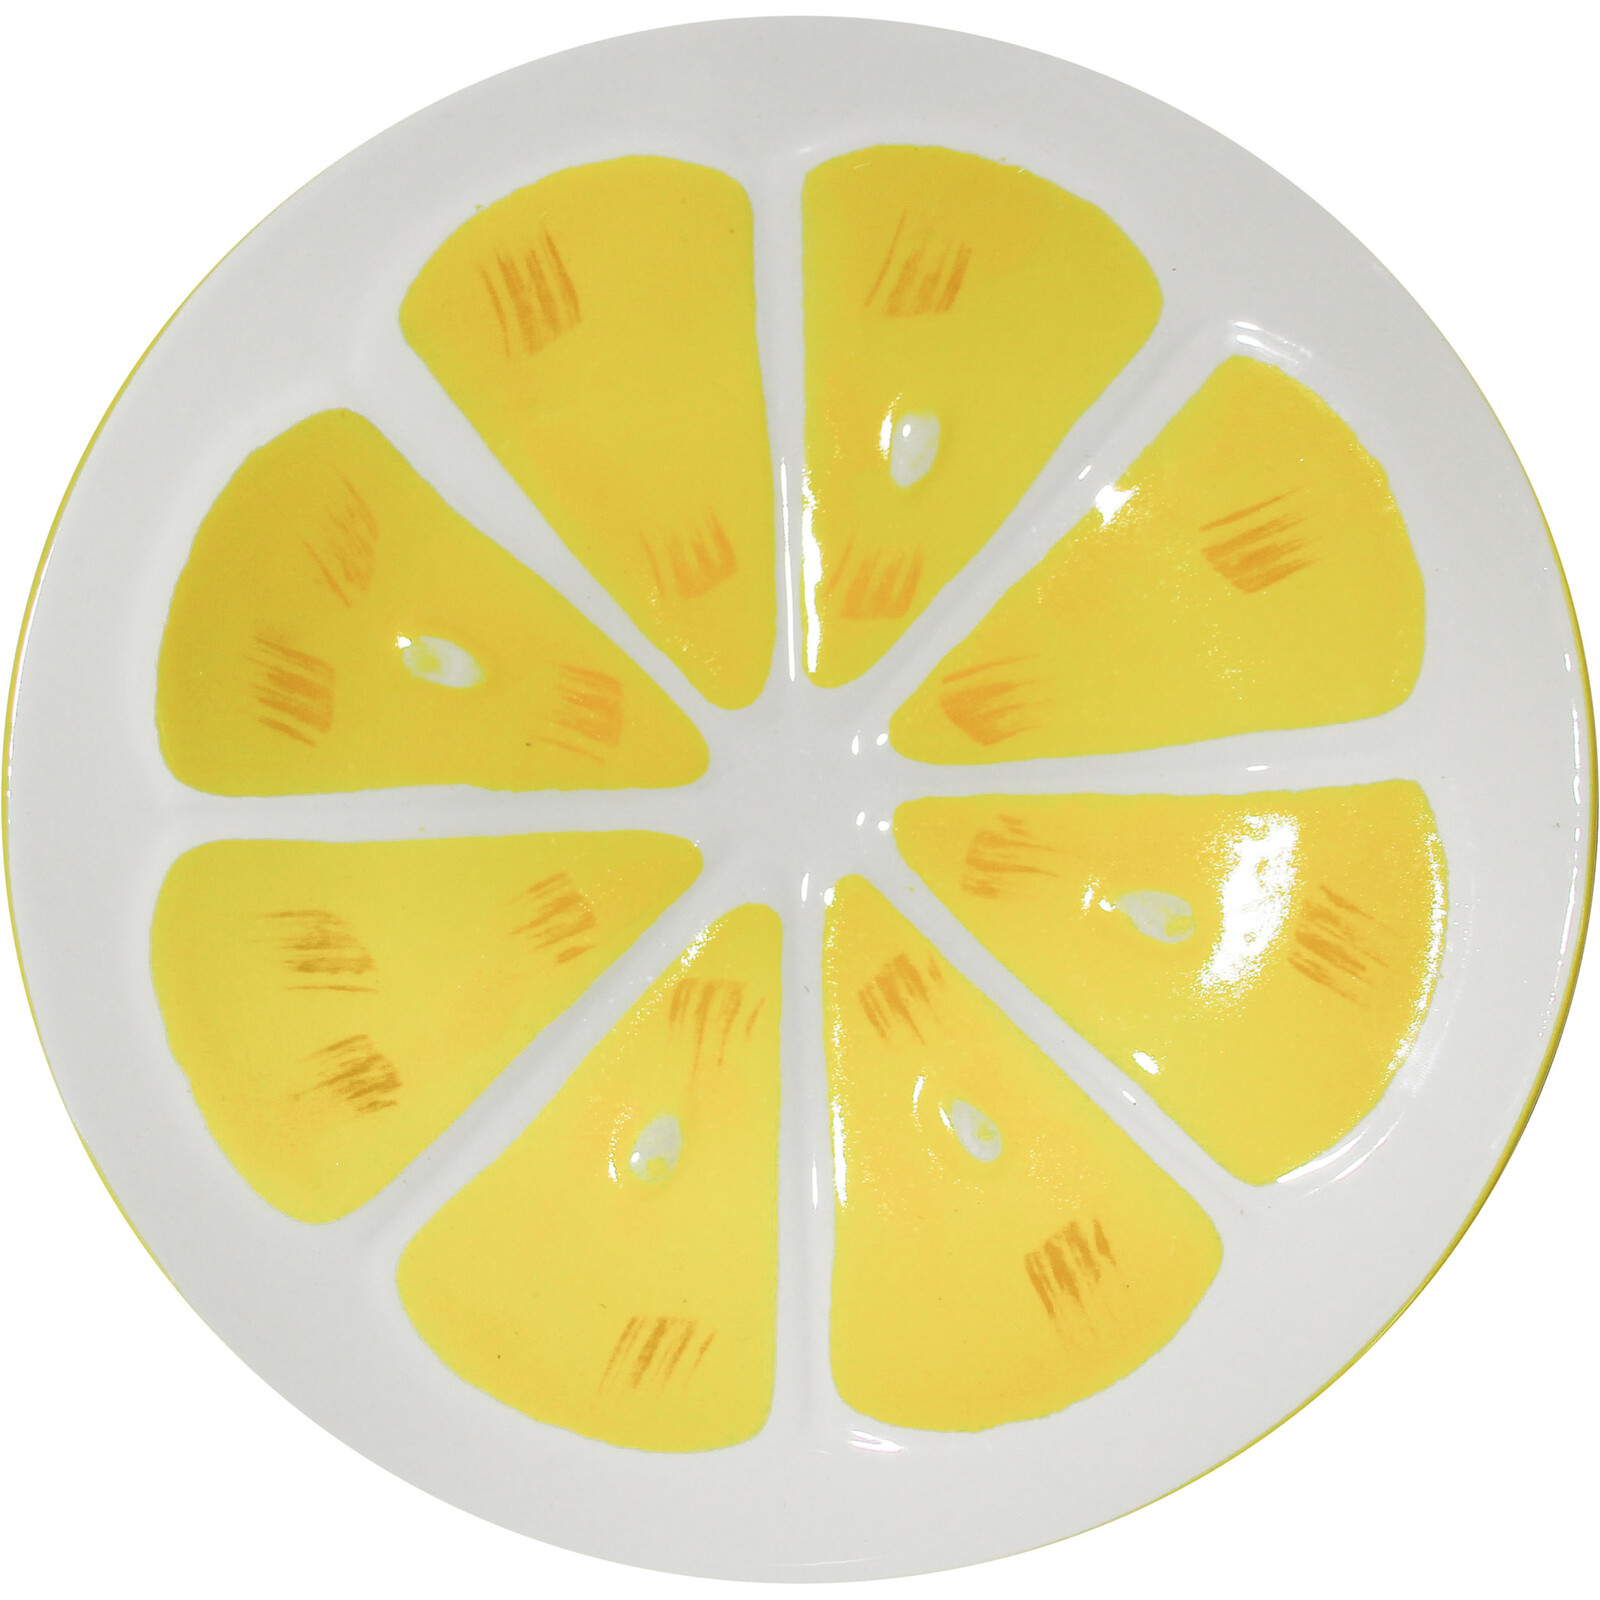 Plate Lemon Slice